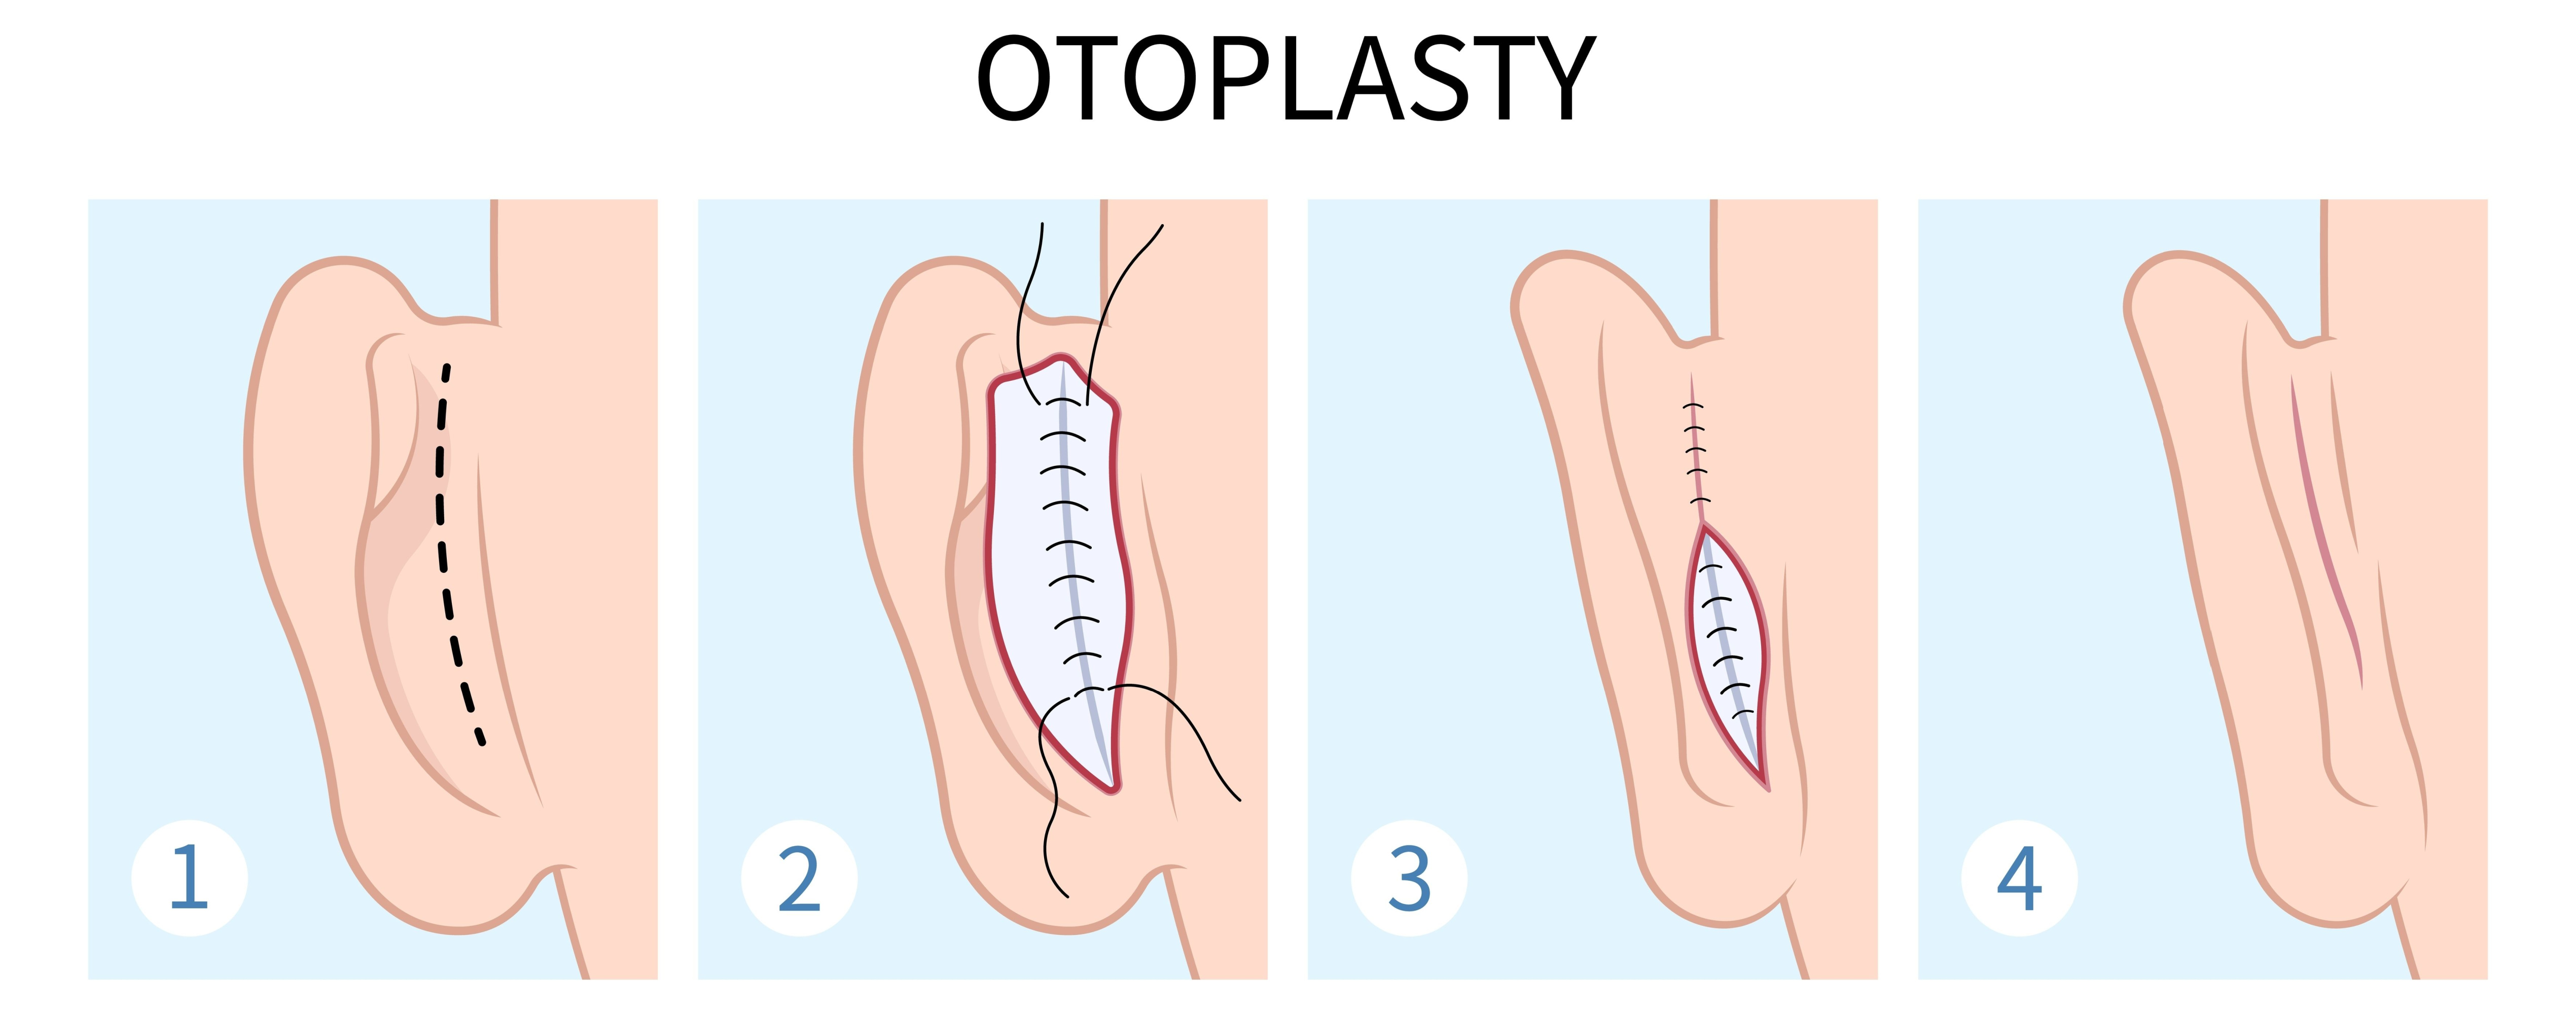 steps of otoplasty surgery